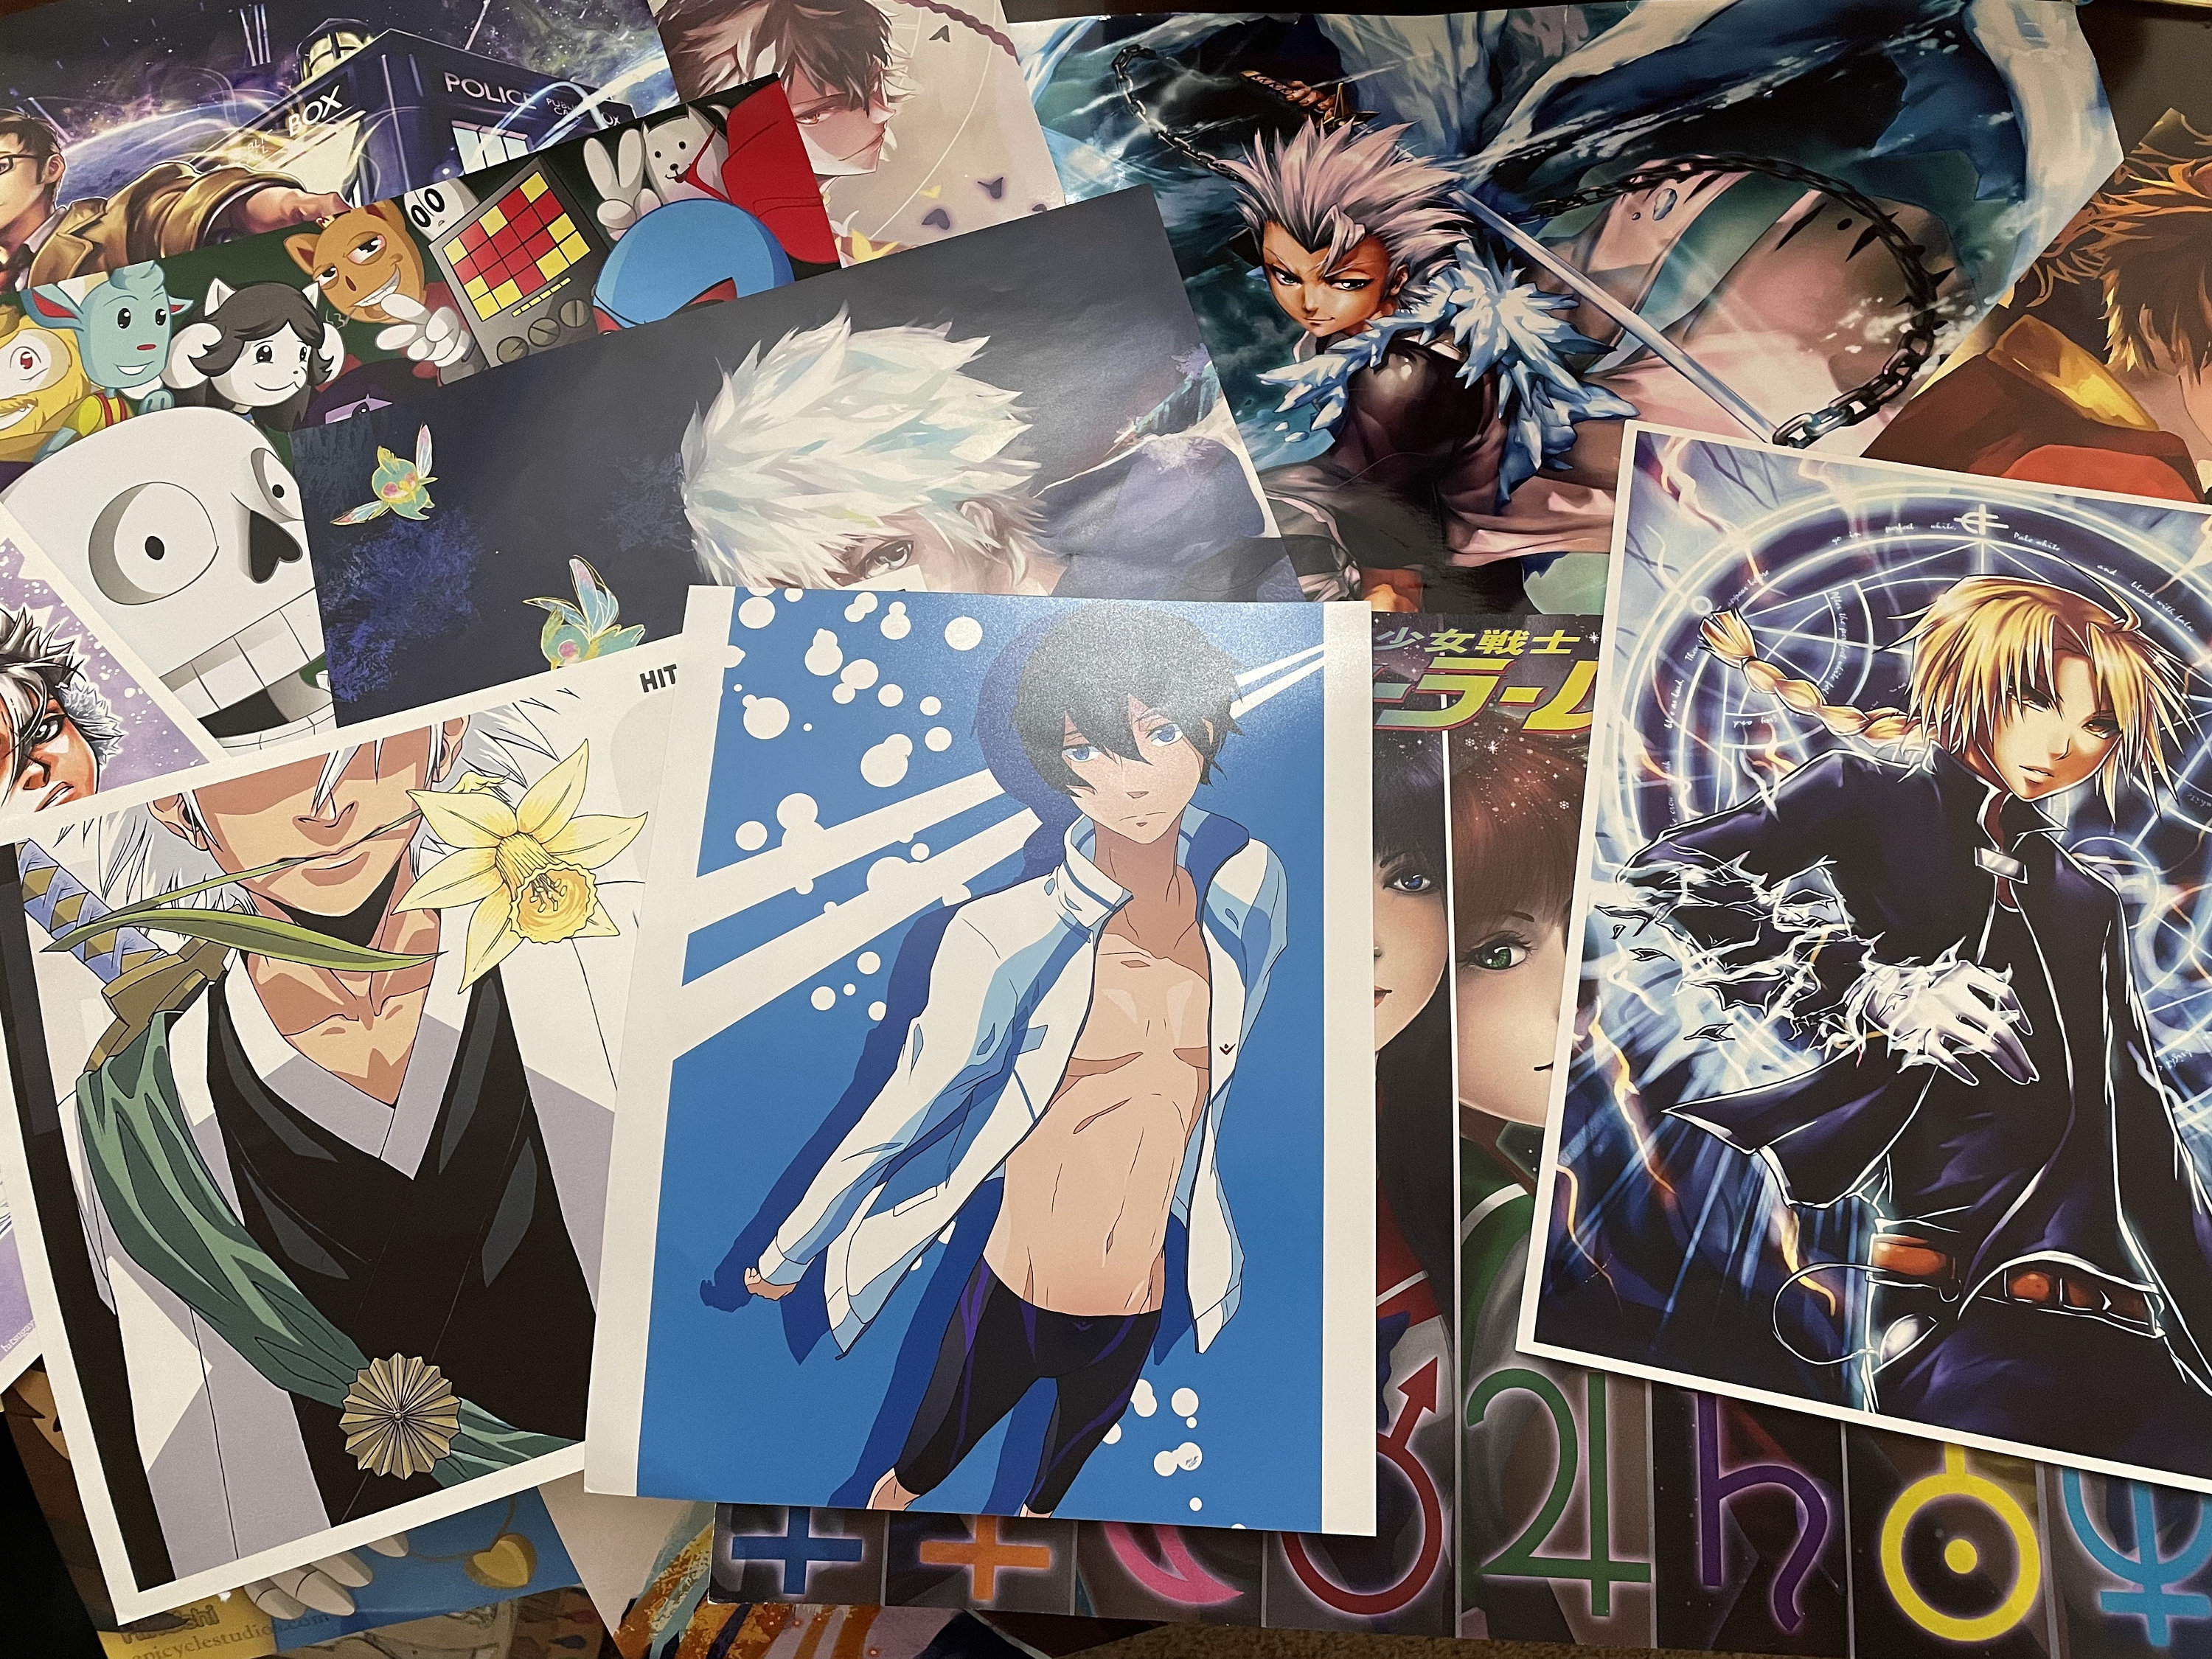 Anime Katekyo Hitman Reborn 3 Canvas Poster Bedroom Decor Sports